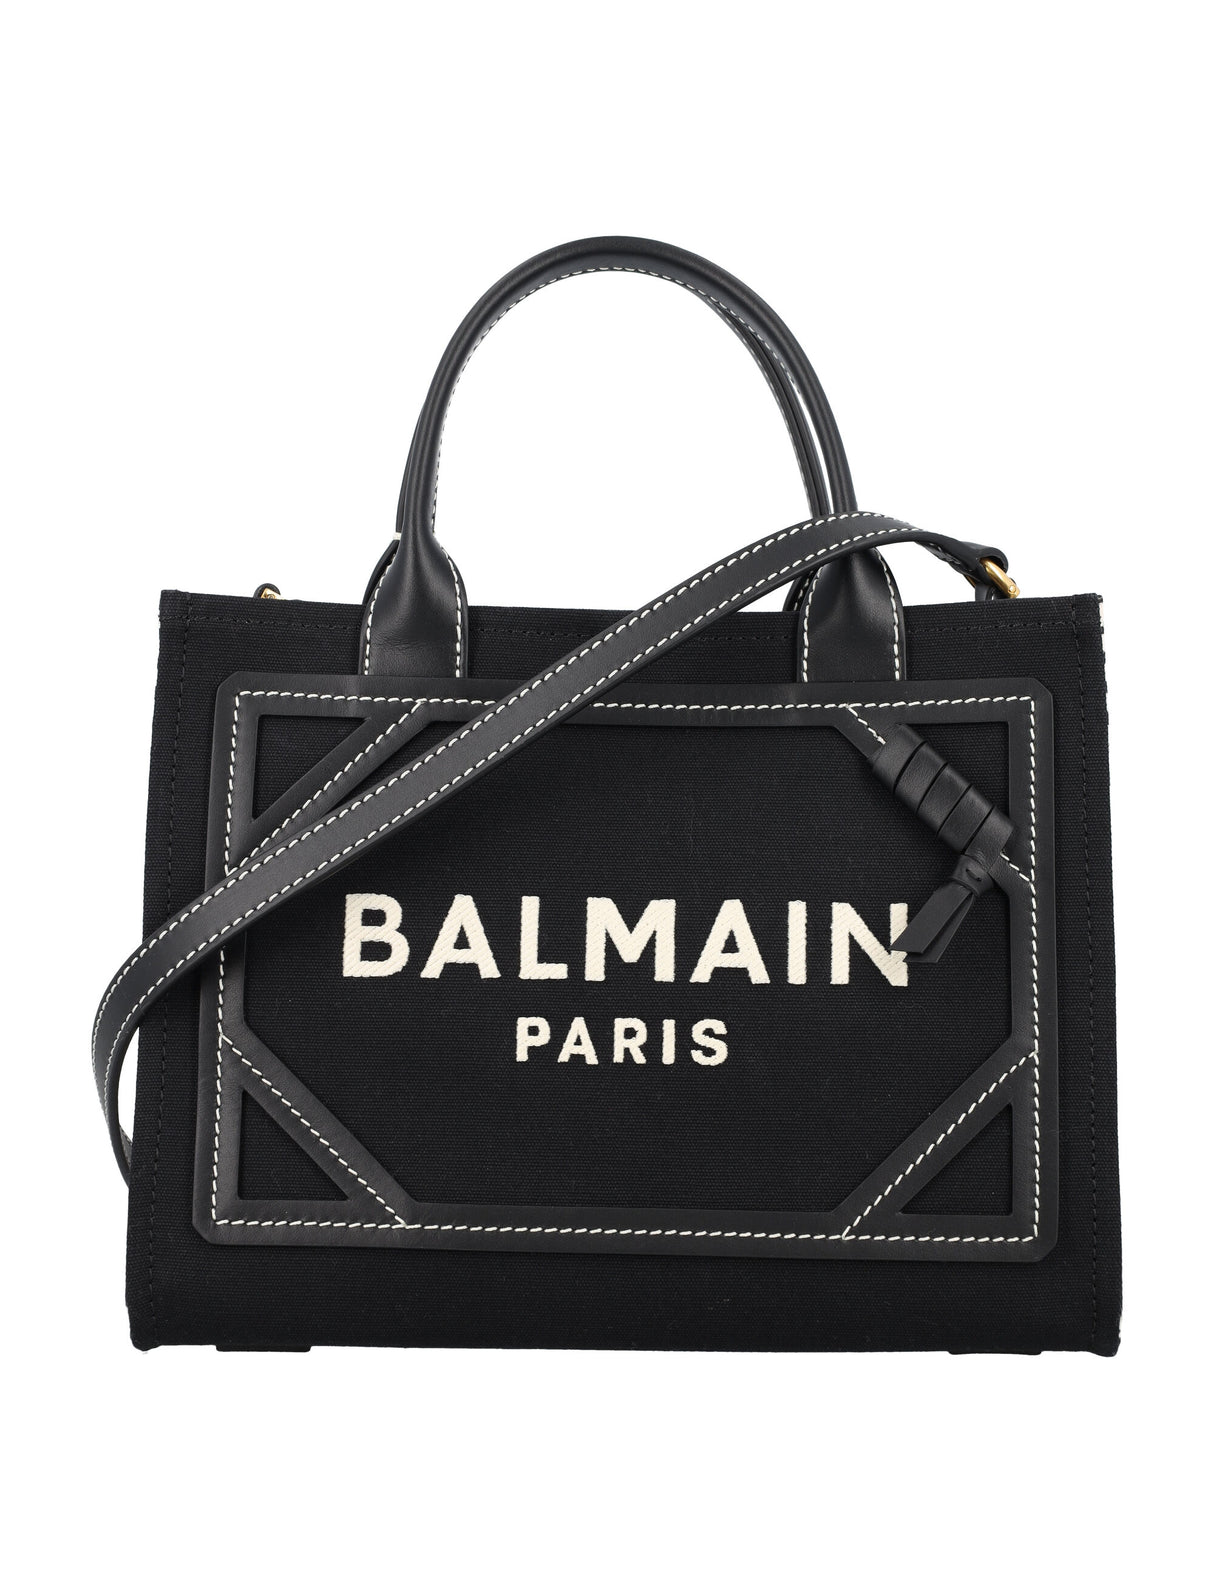 BALMAIN B-ARMY SMALL SHOPPER Handbag